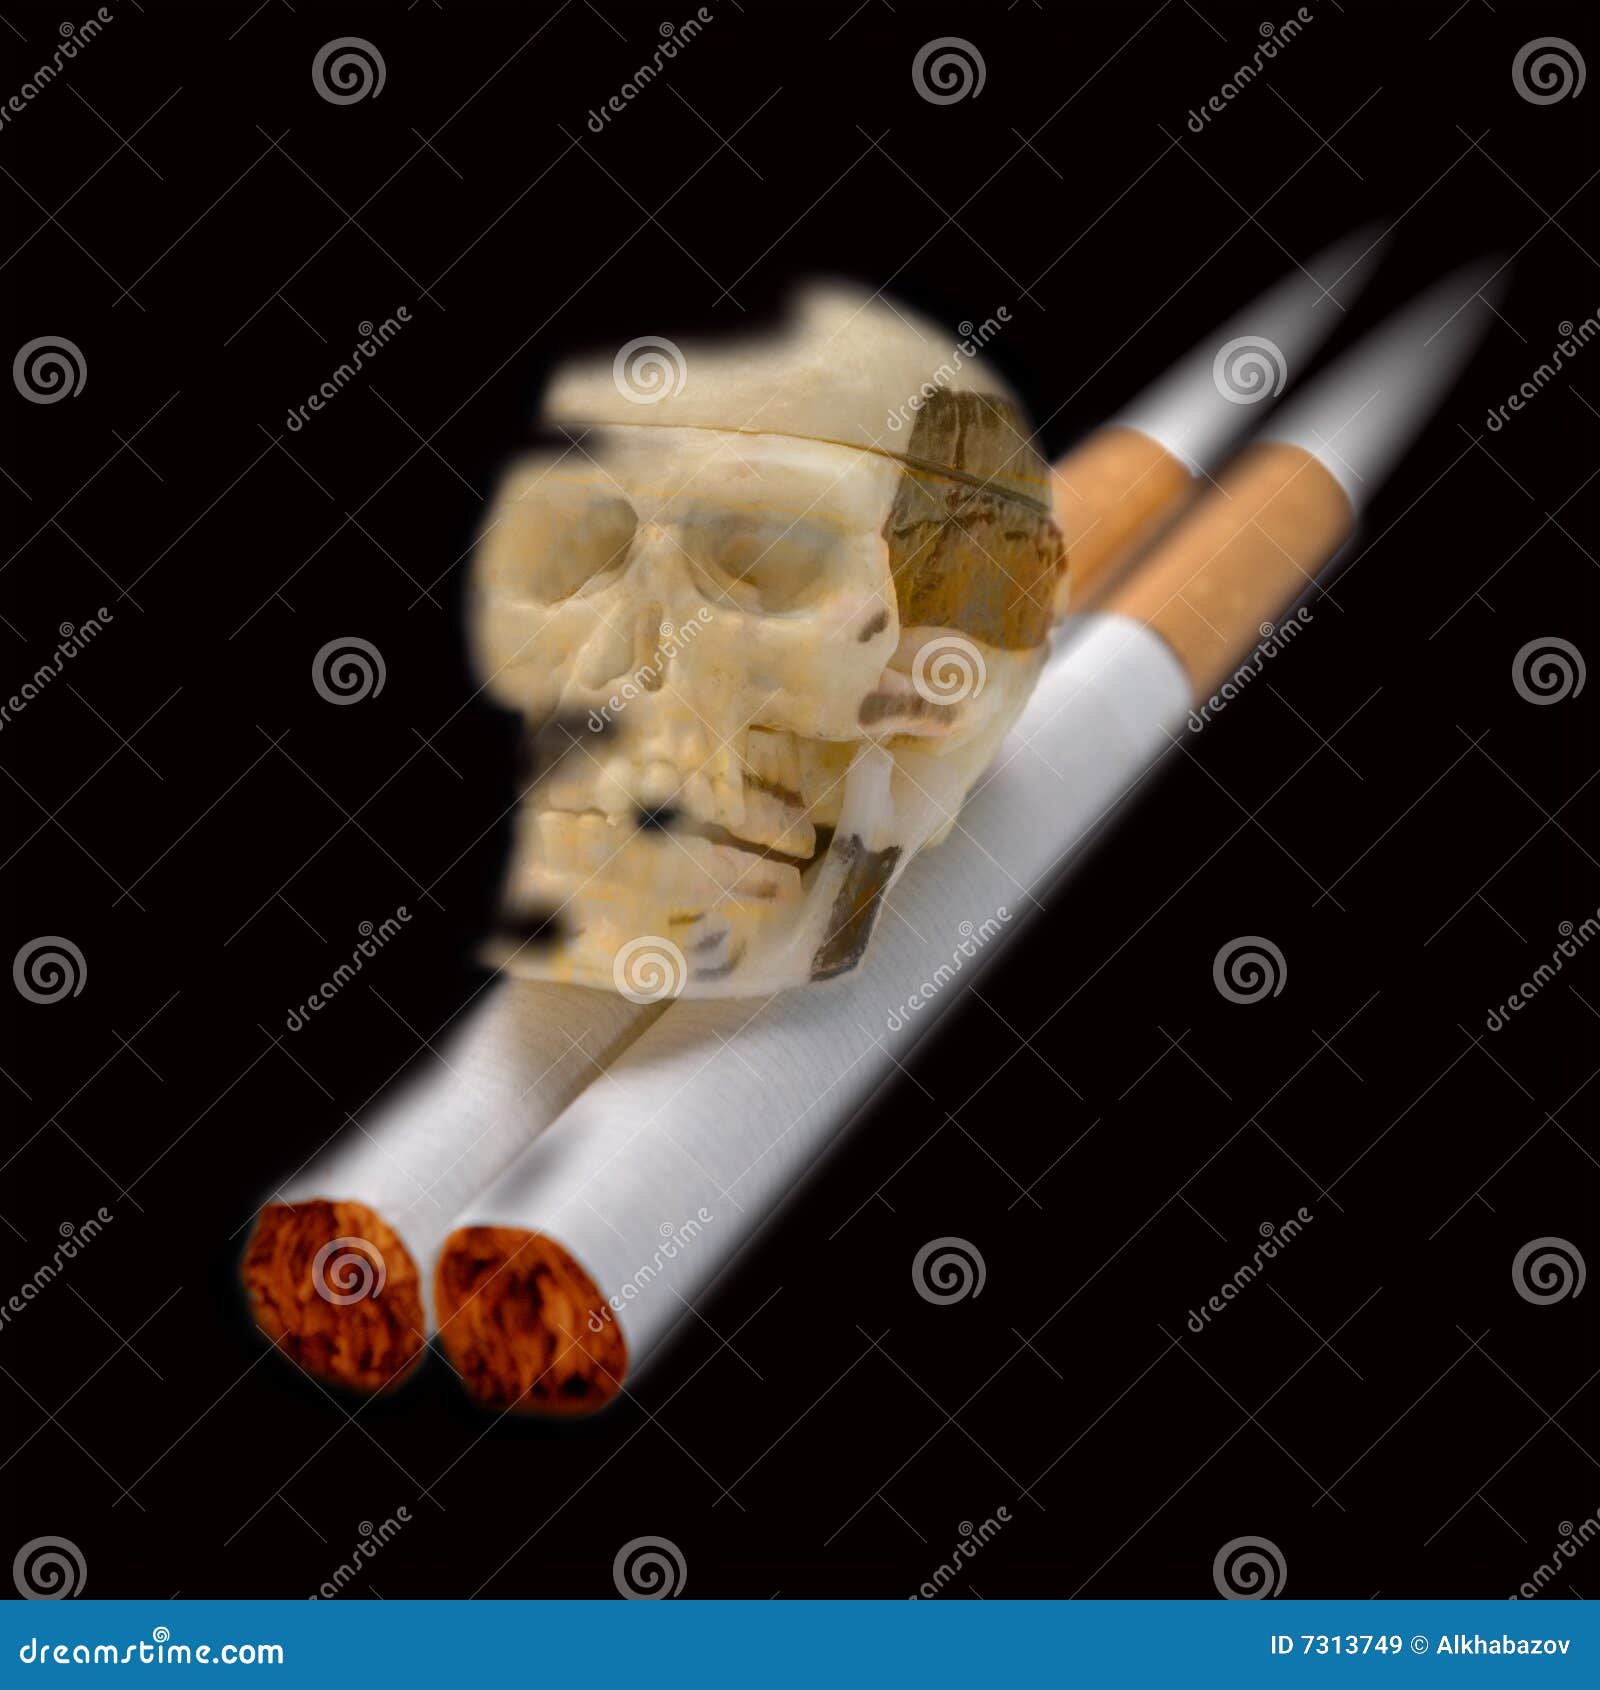 Tobacco death